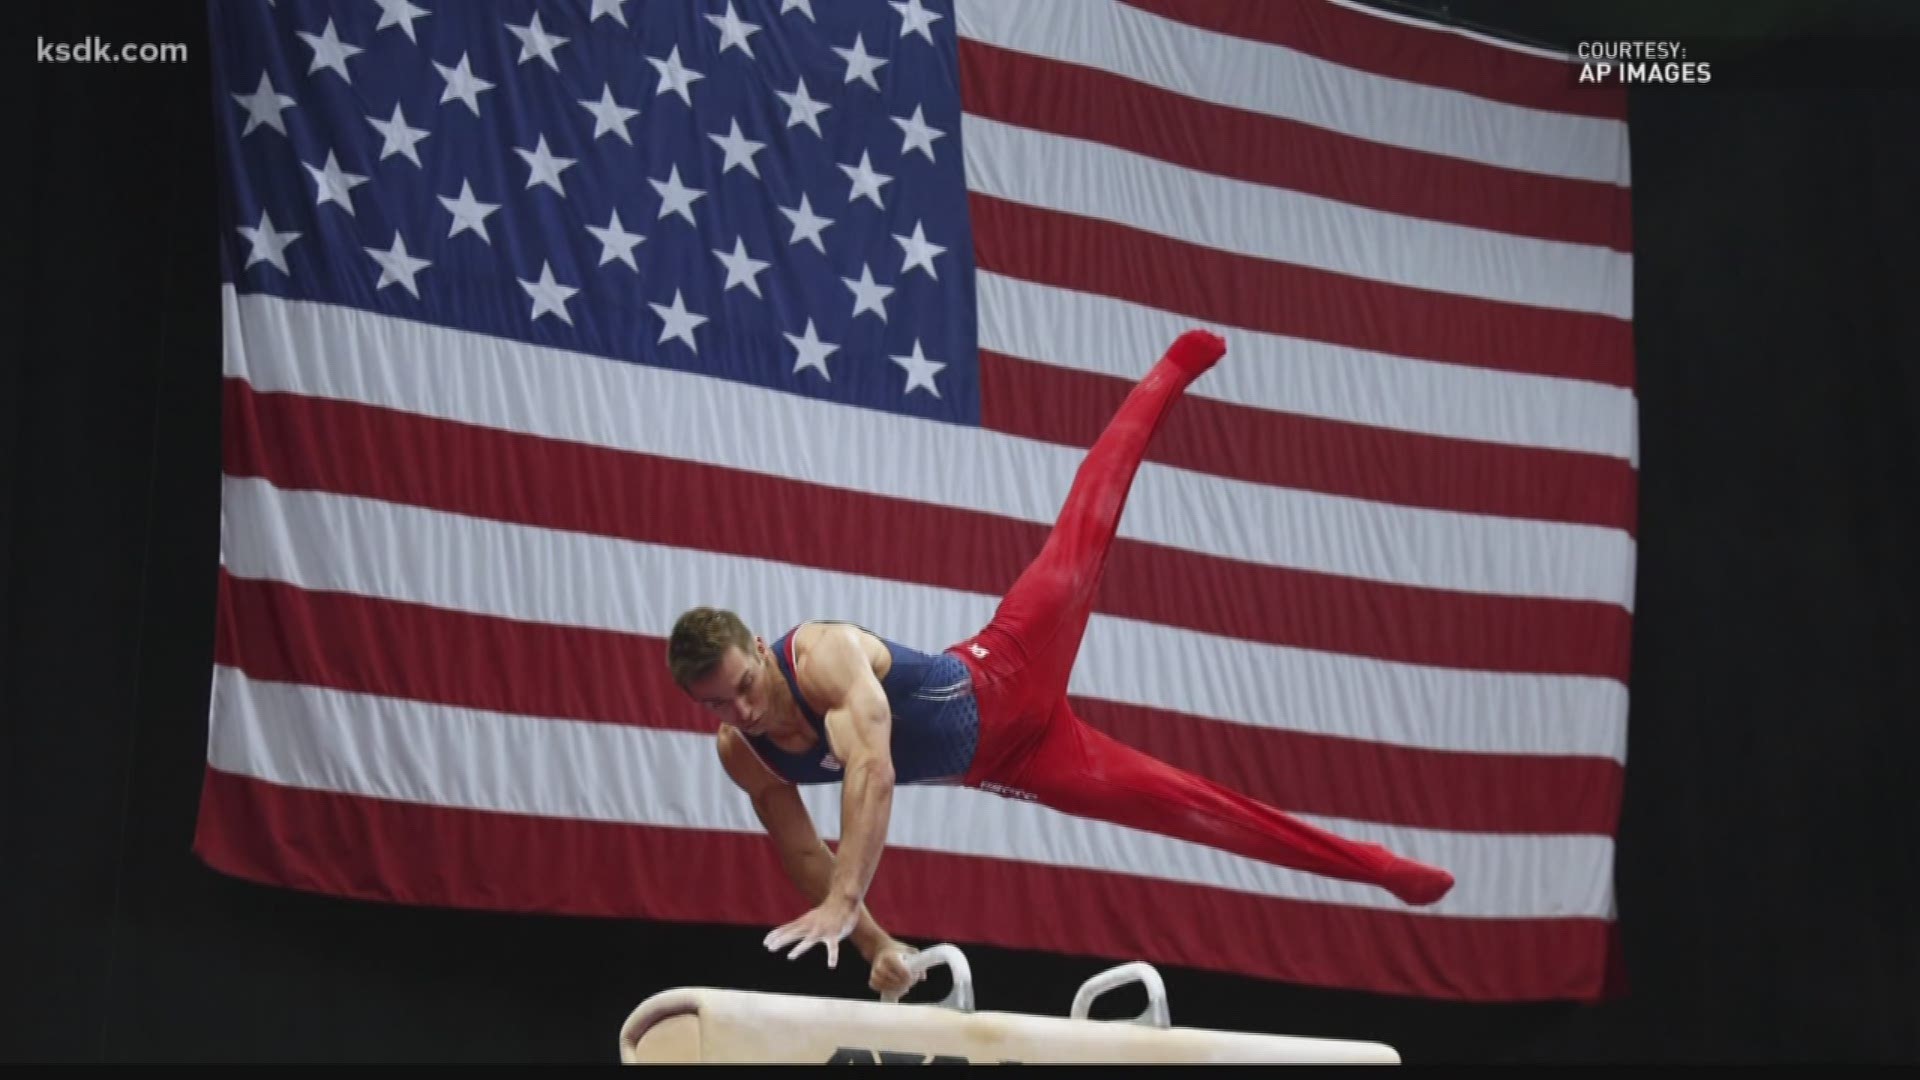 USA Gymnastics Olympic Trials tickets go on sale Aug. 8